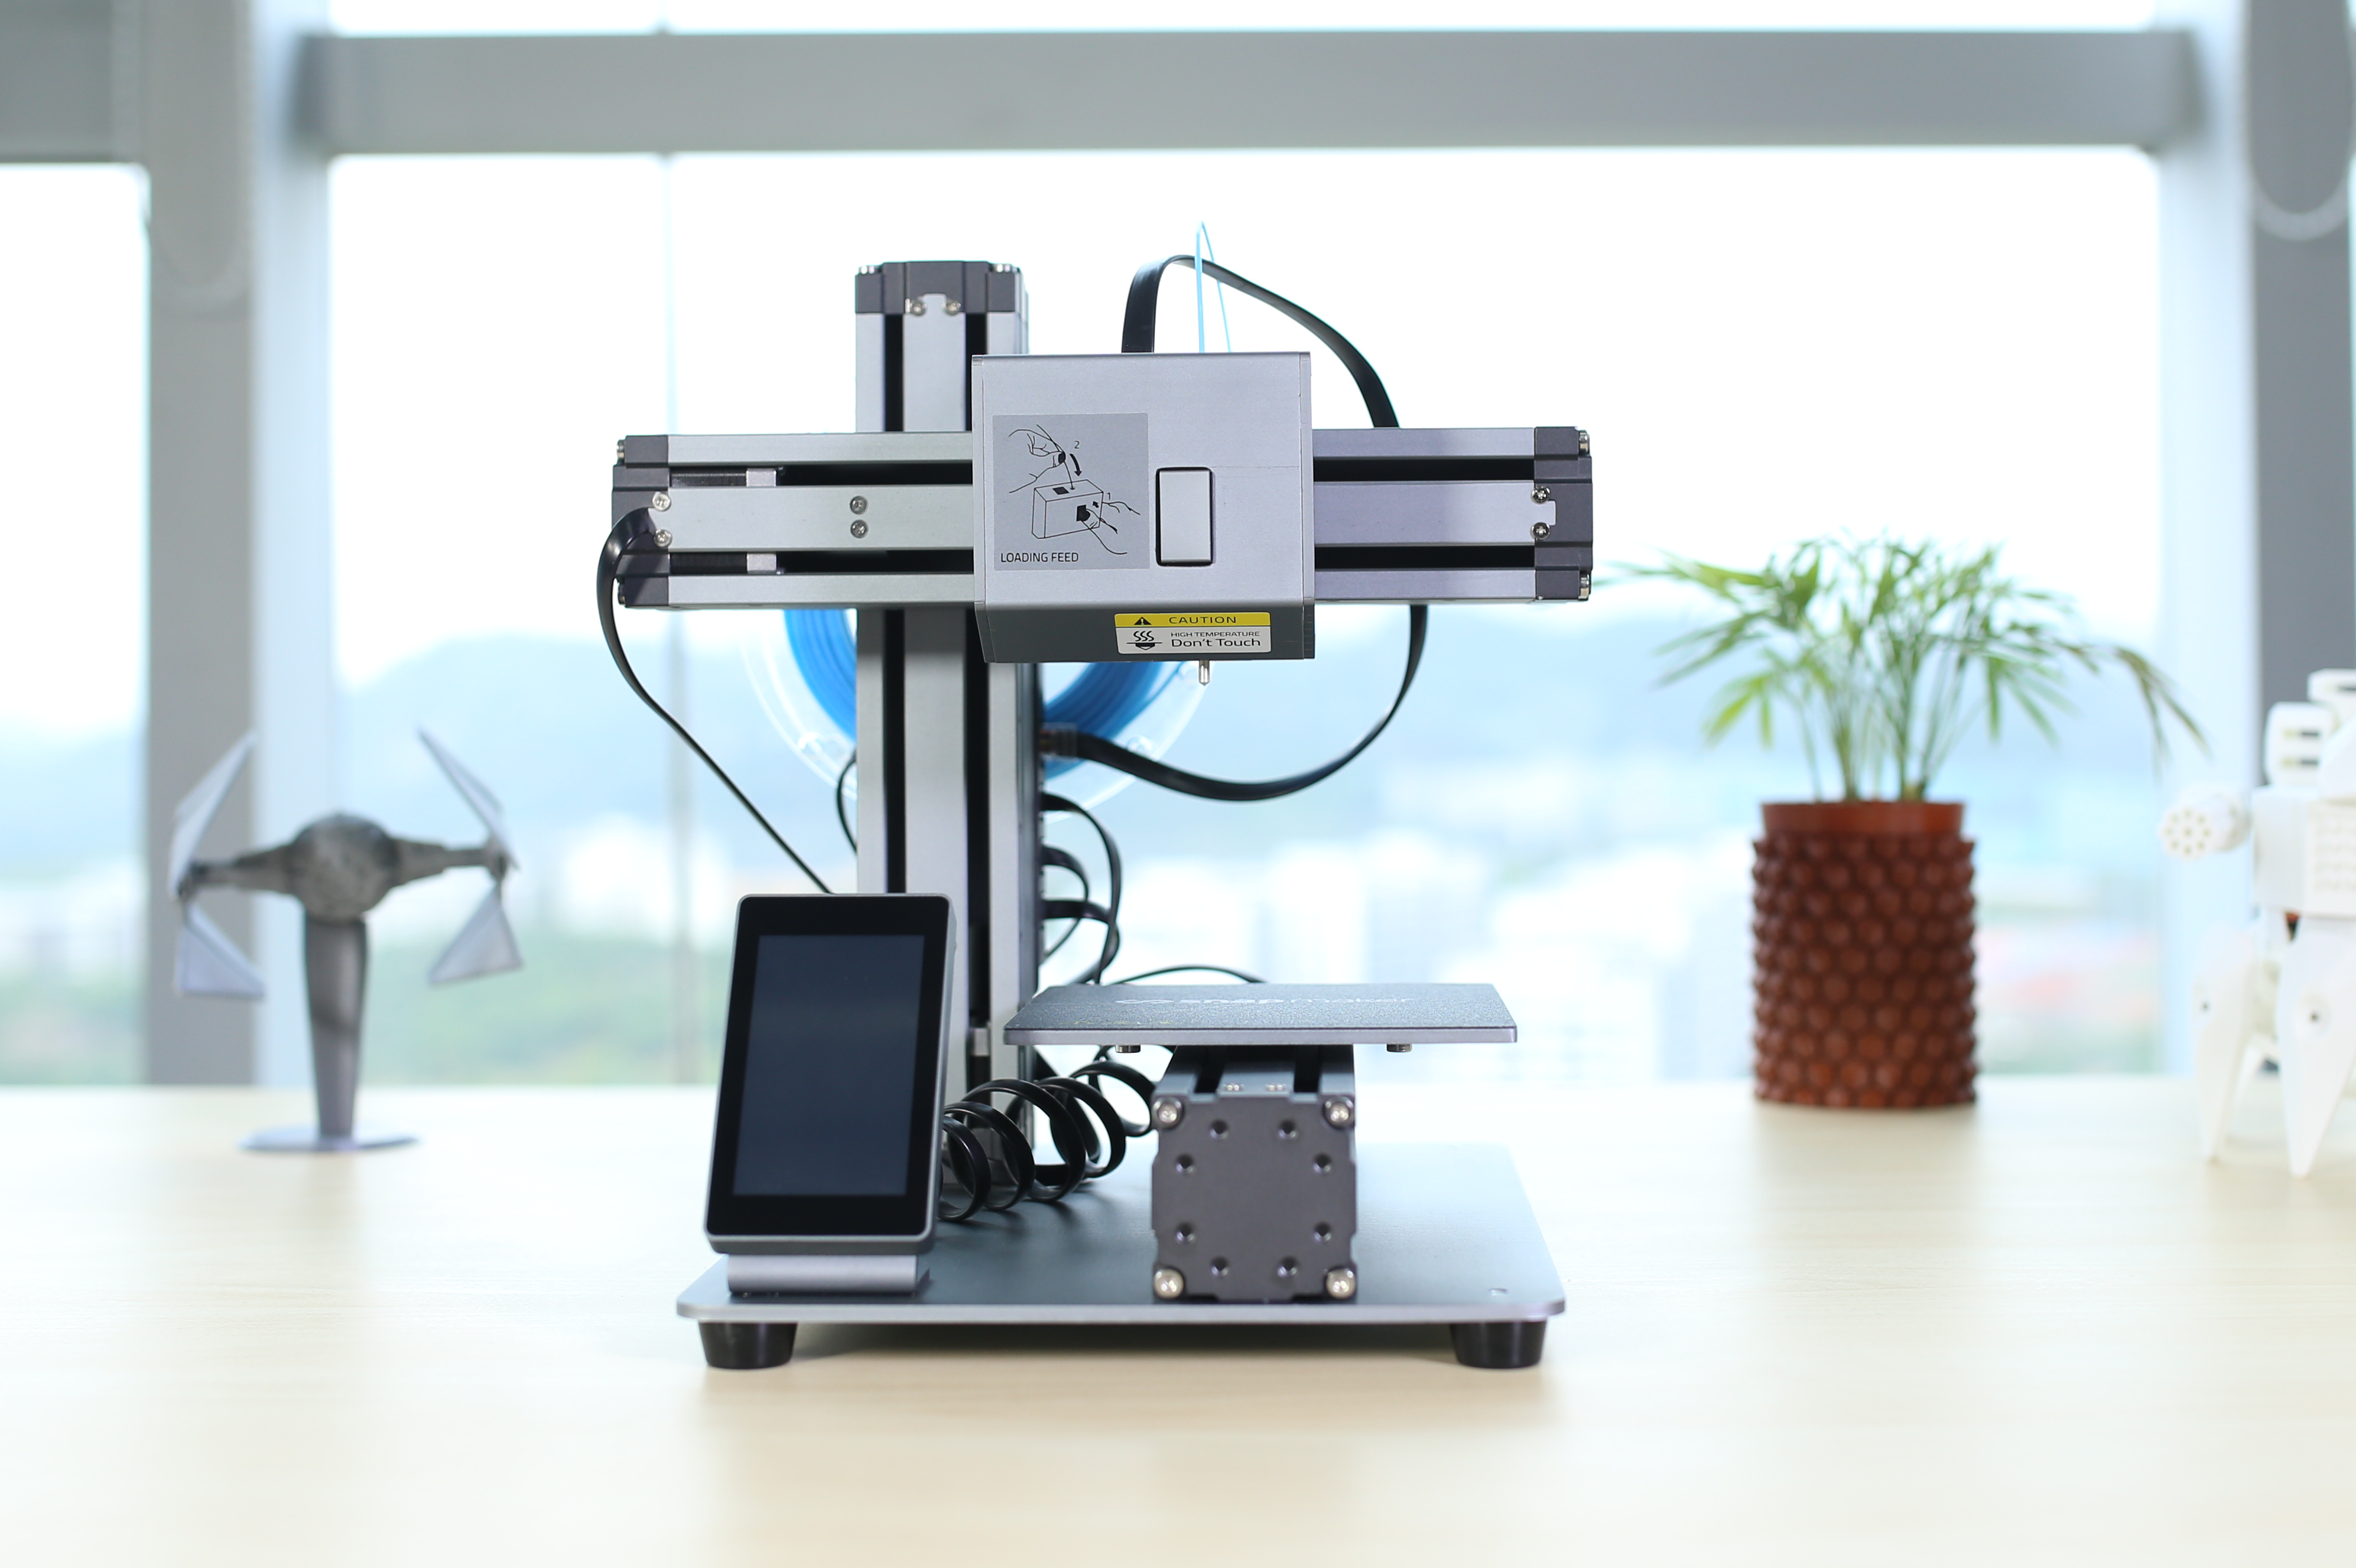 https://www.treatstock.com/static/uploads/printers/Snapmaker-3D-printing-1-1.png